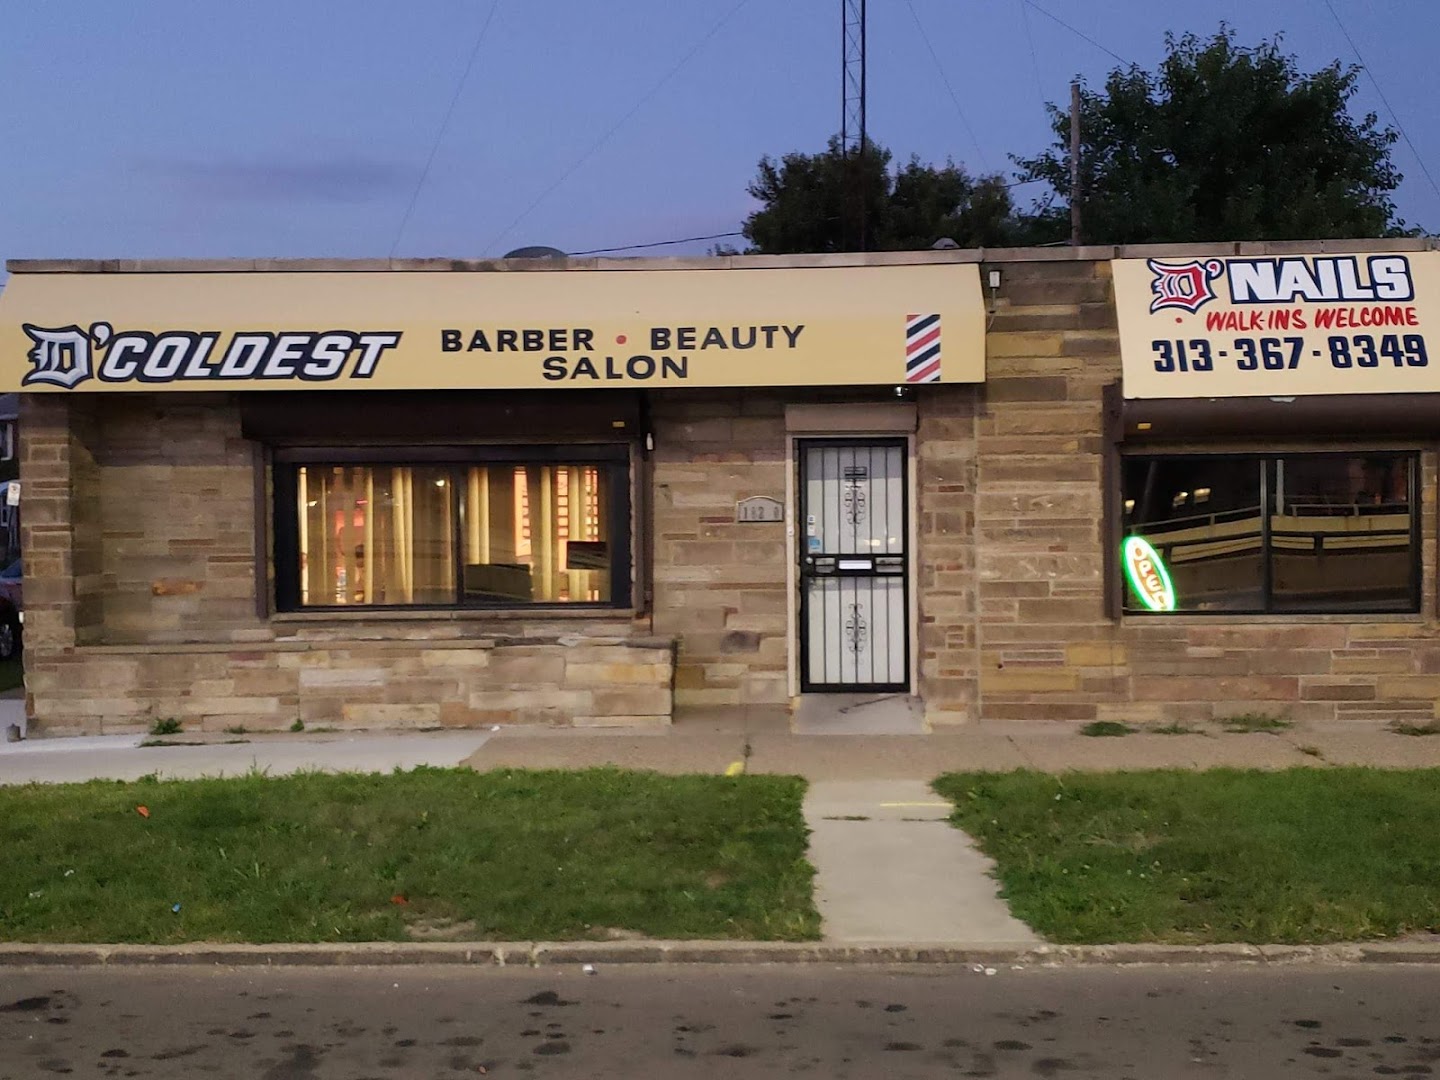 Detroit Coldest Barber and Beauty LLC